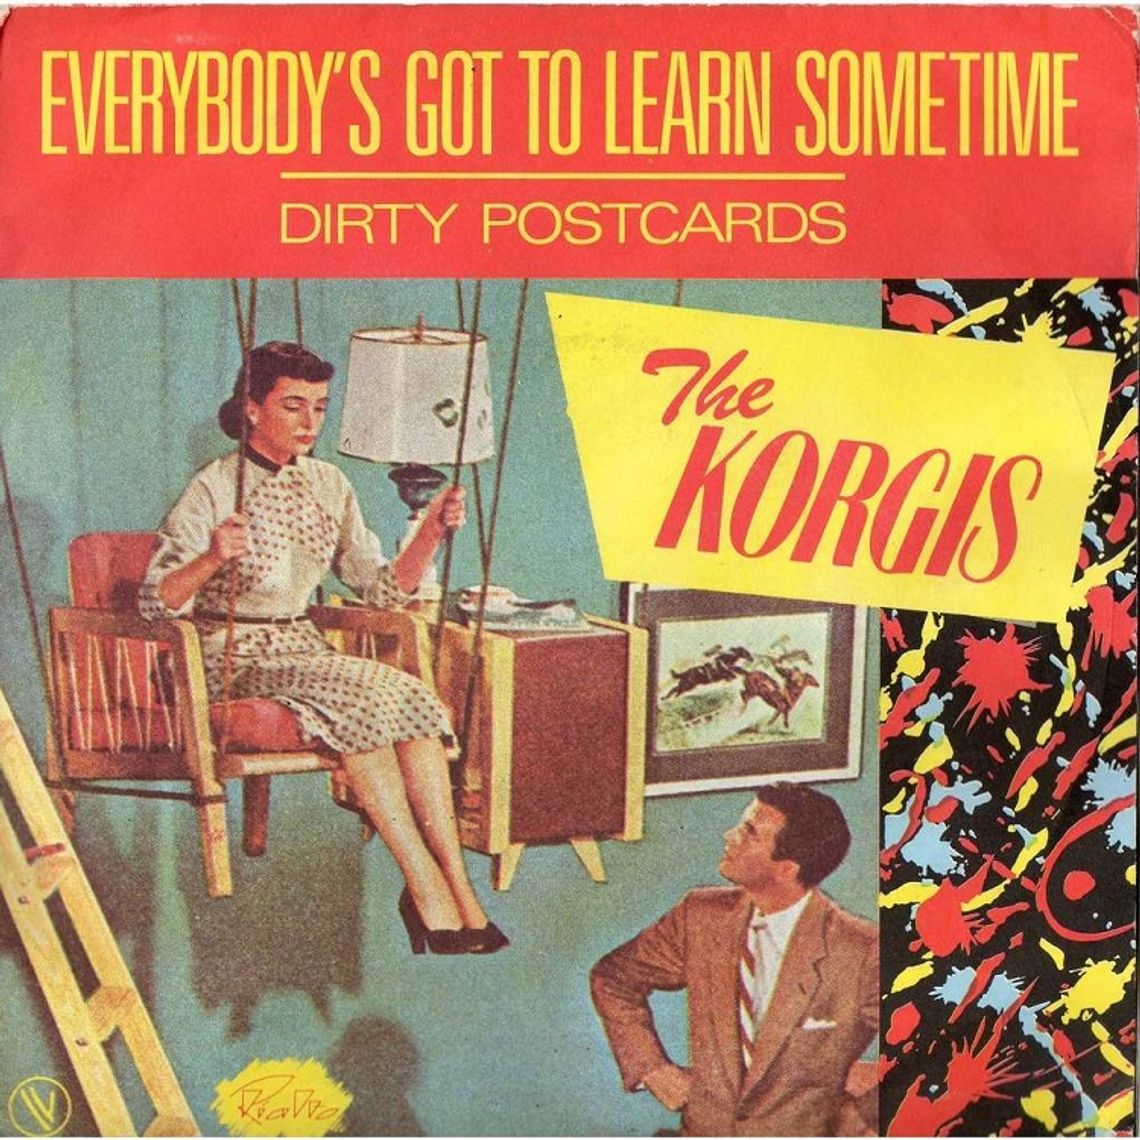 THE KORGIS "Everybody's got to learn sometime"